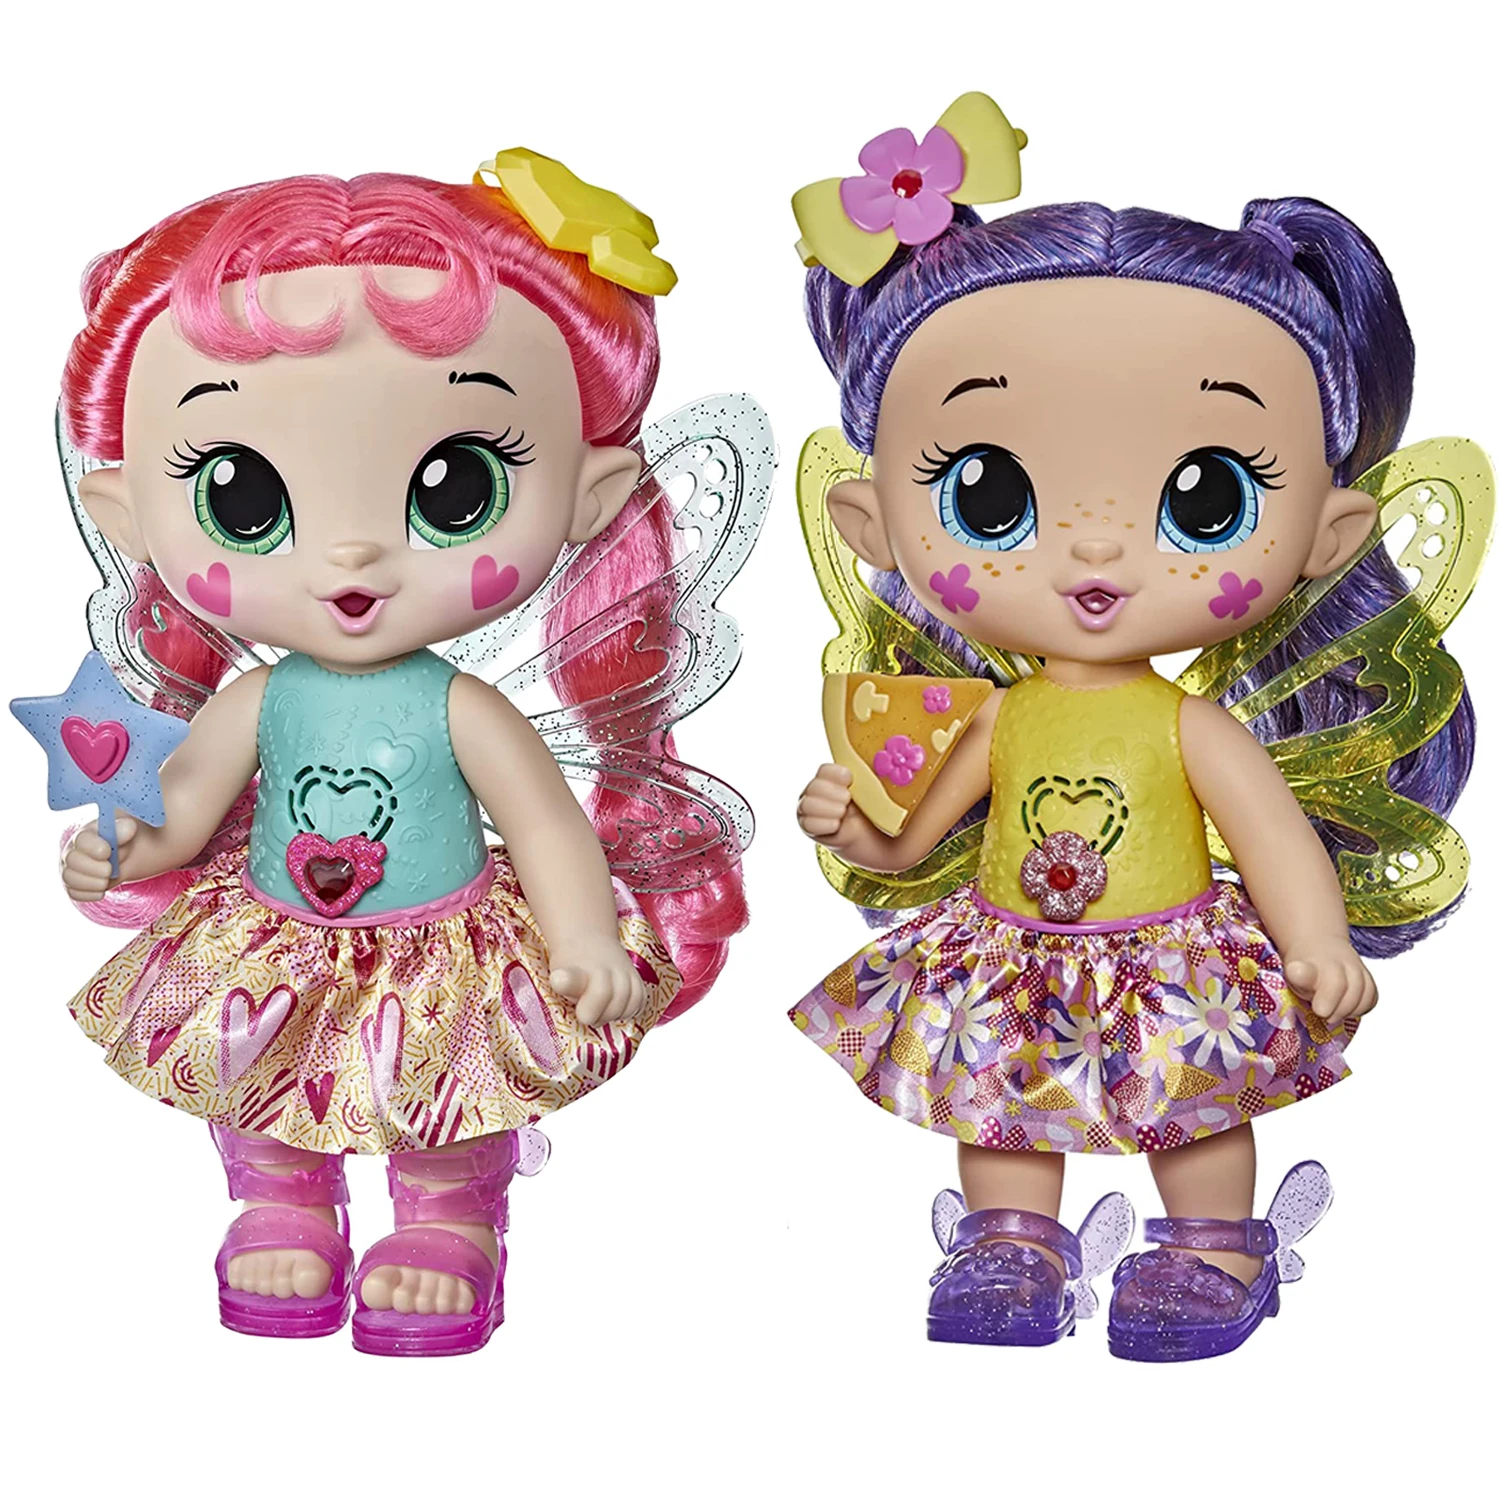 original Baby Alive Glo Pixies Doll Electronic Interactive Toys игрушки для девочек Toy Doll Set Girl Birthday Gift Children Toy